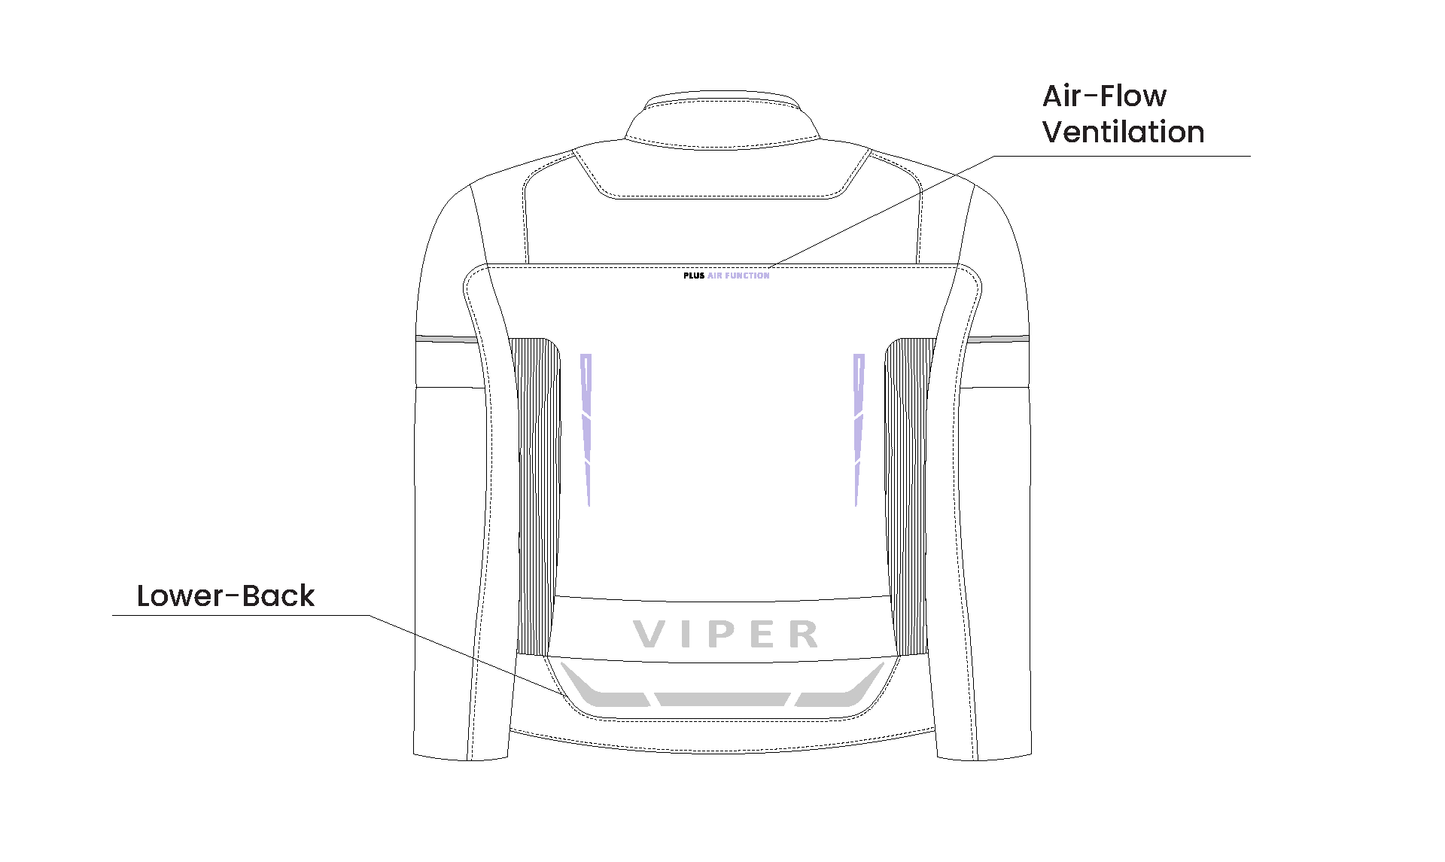 Viper Lua Ladies CE Jacket - Black